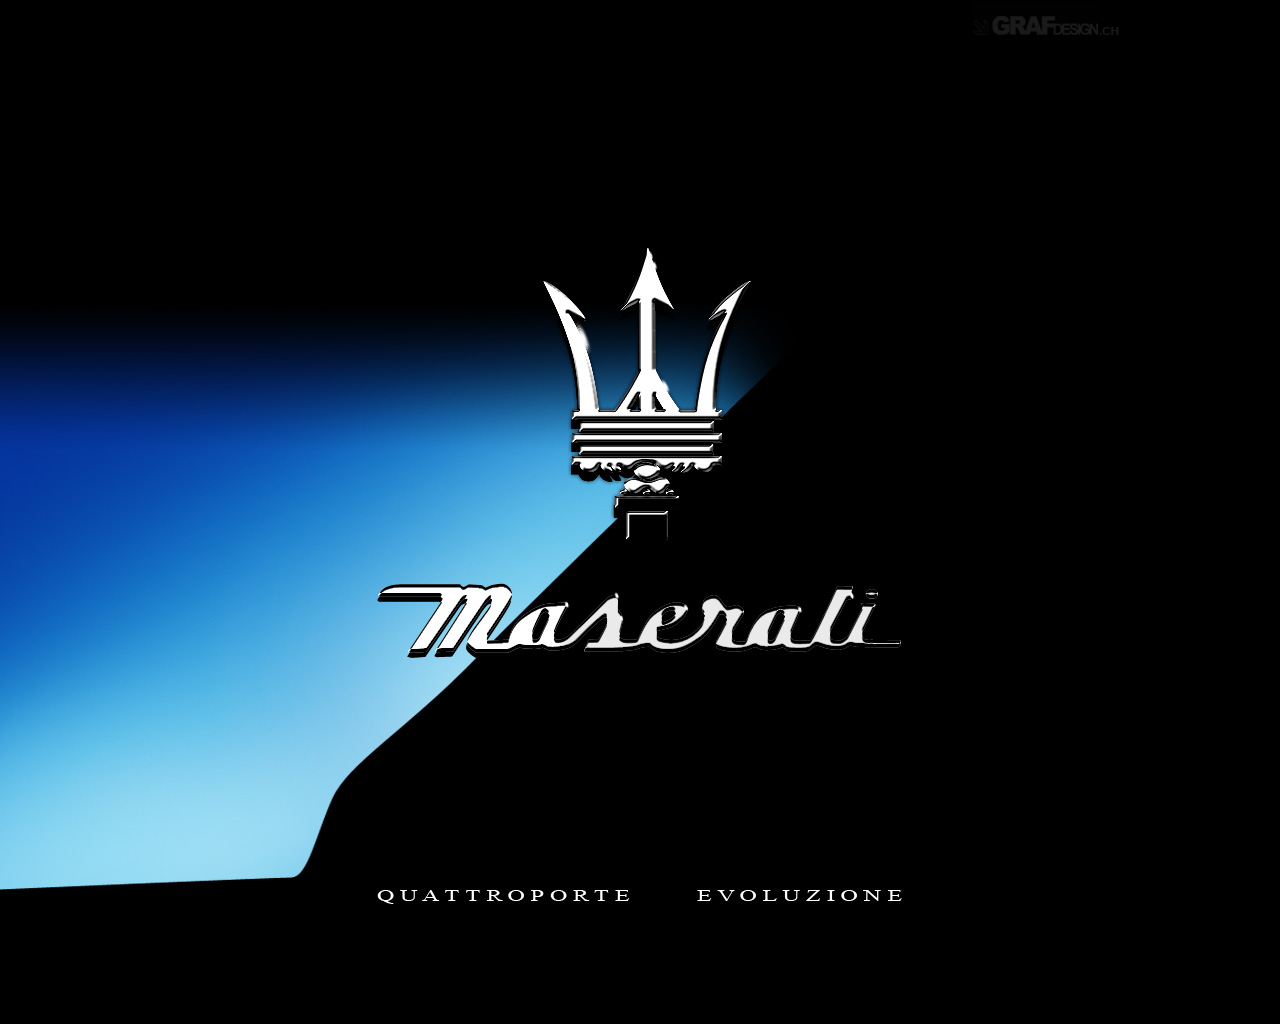 maserati logo wallpaper hd,logo,font,brand,graphic design,sky